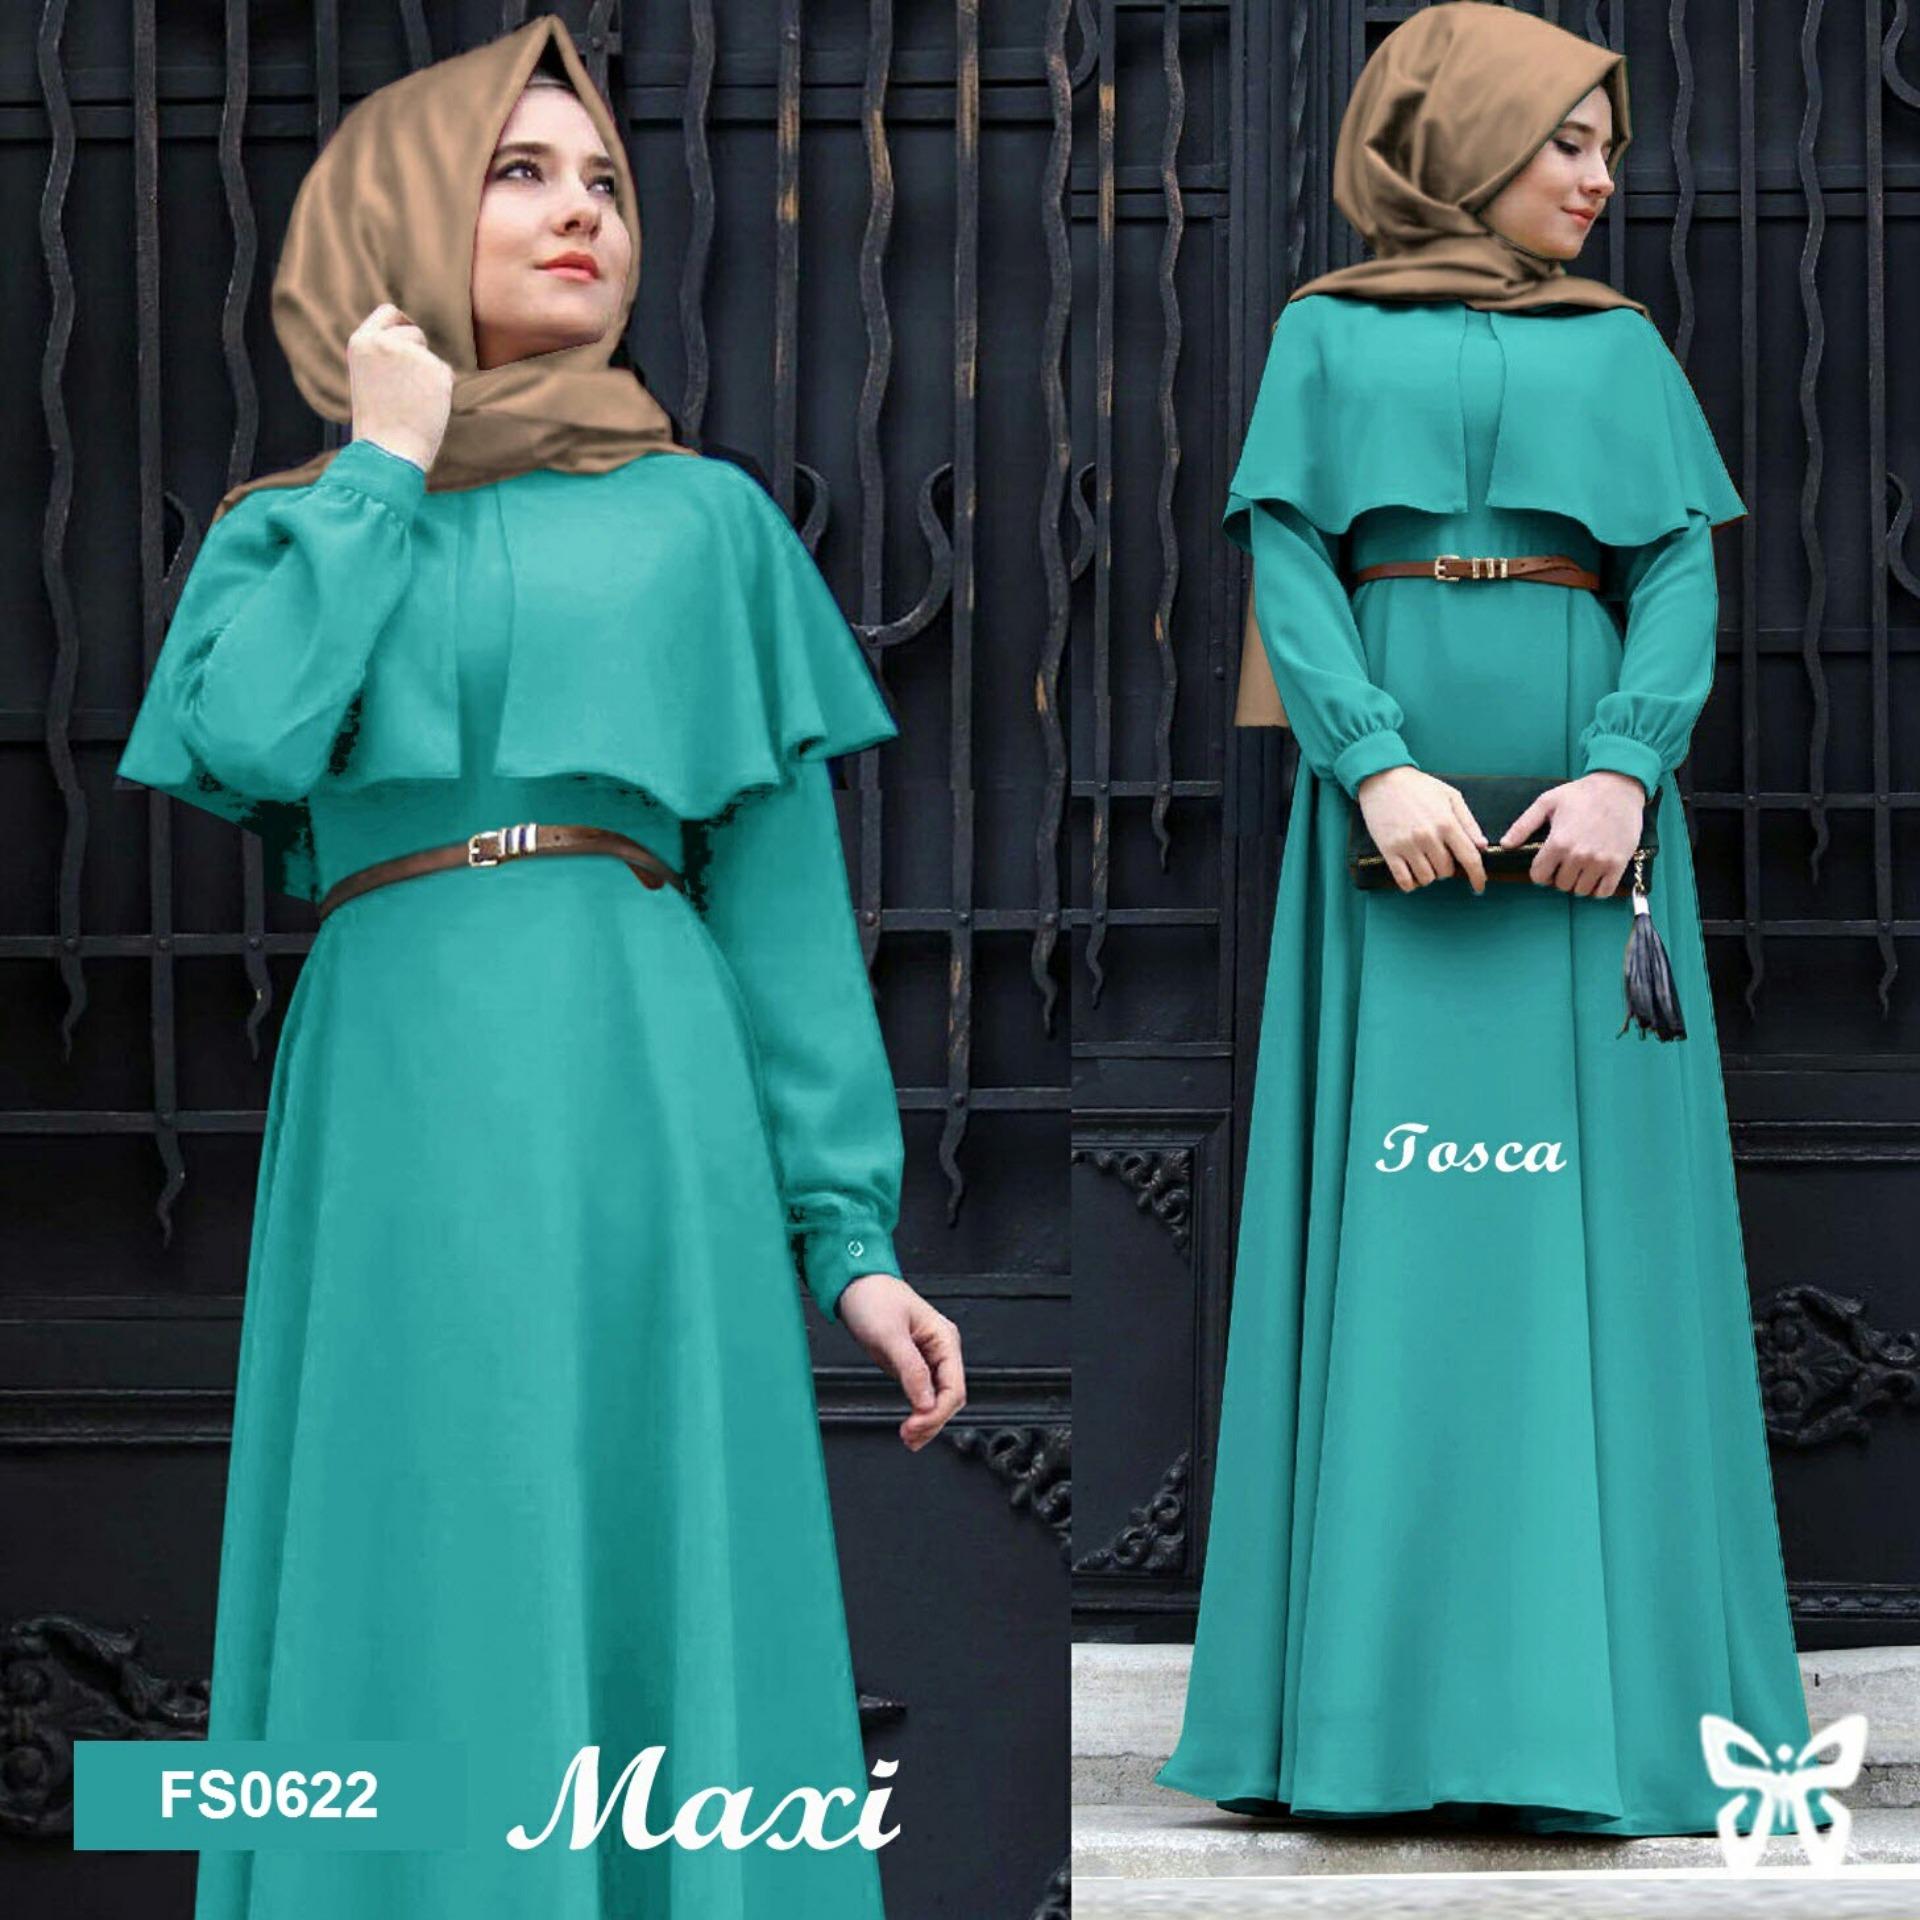 Flavia Store Maxi Dress Lengan Panjang Set 2 in 1 FS0622 - TOSCA / Gamis / Gaun Pesta Muslimah / Baju Muslim Wanita / Hijab / Srclara